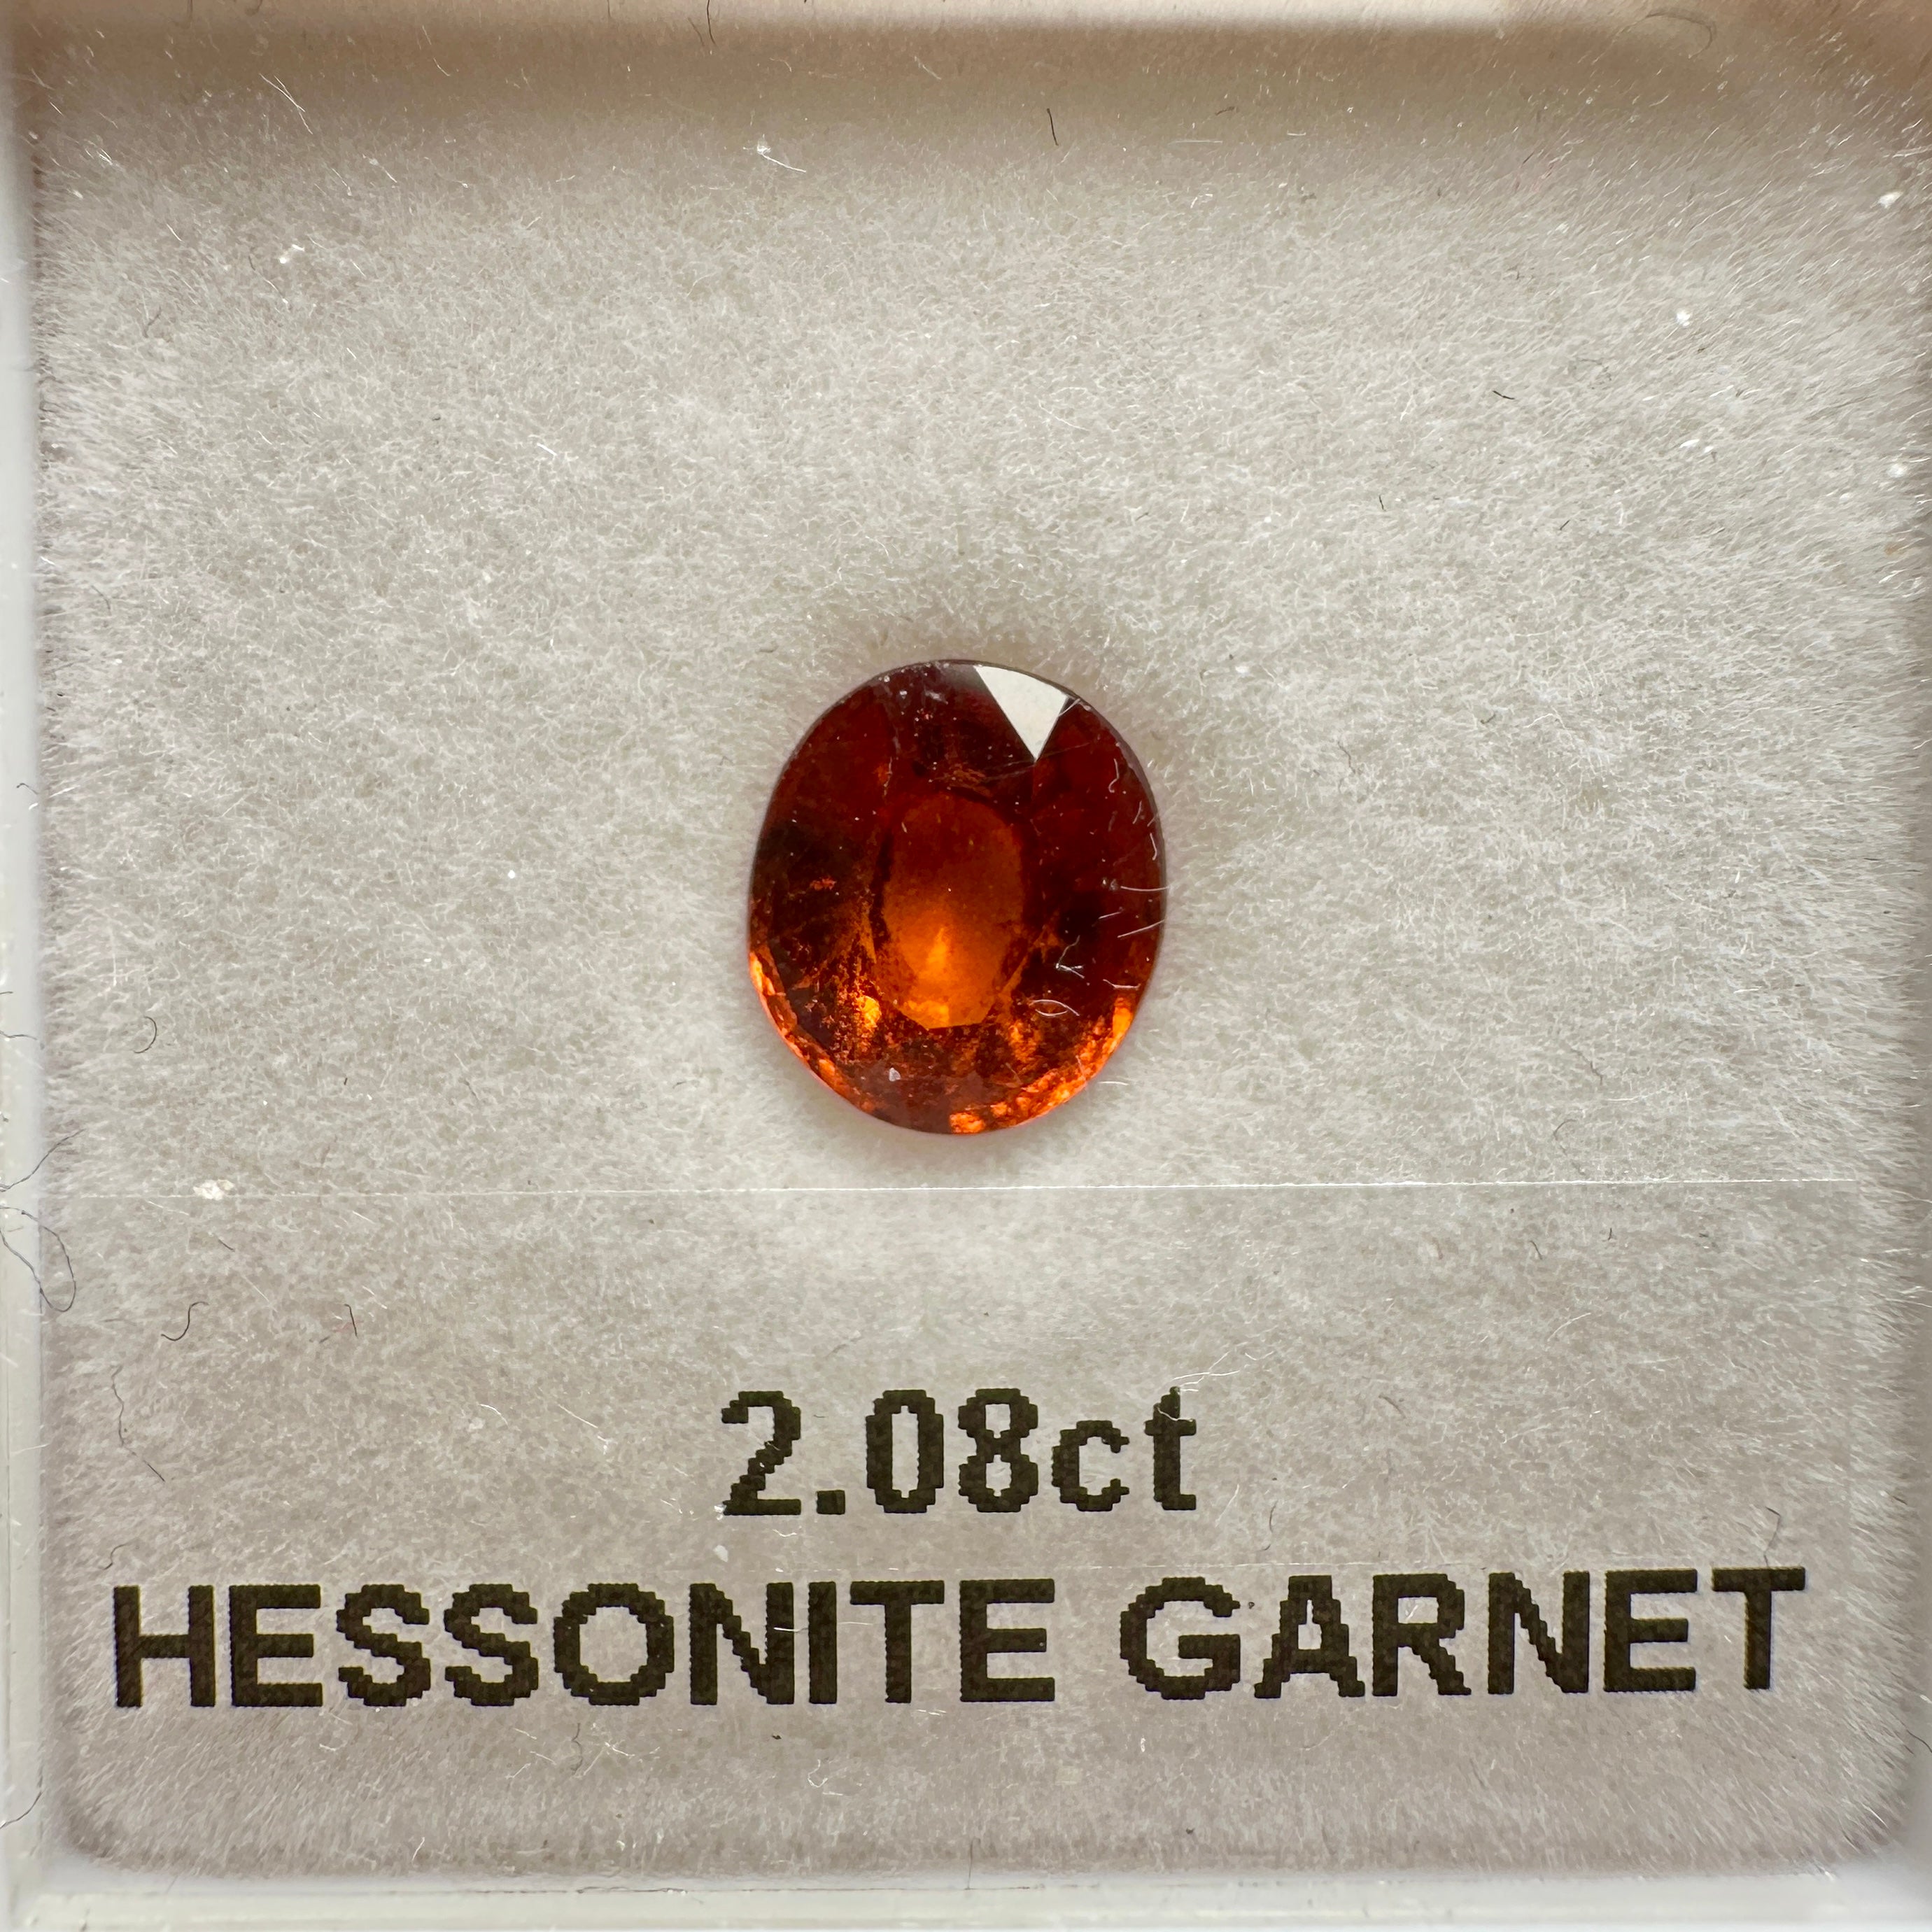 2.08ct Hessonite Garnet, Untreated Unheated, native cut